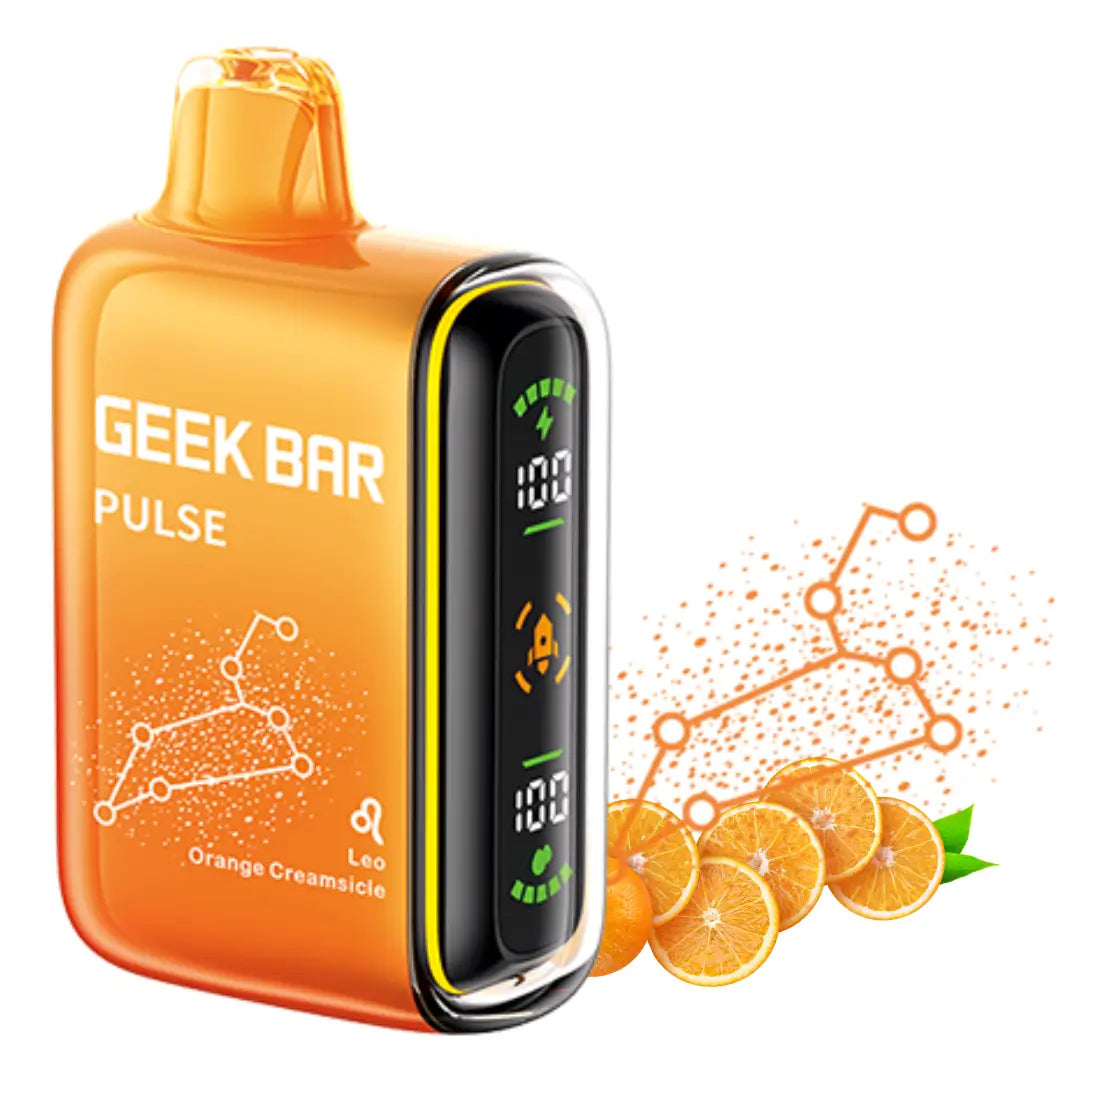 Geek Bar Pulse California Orange Creamsicle